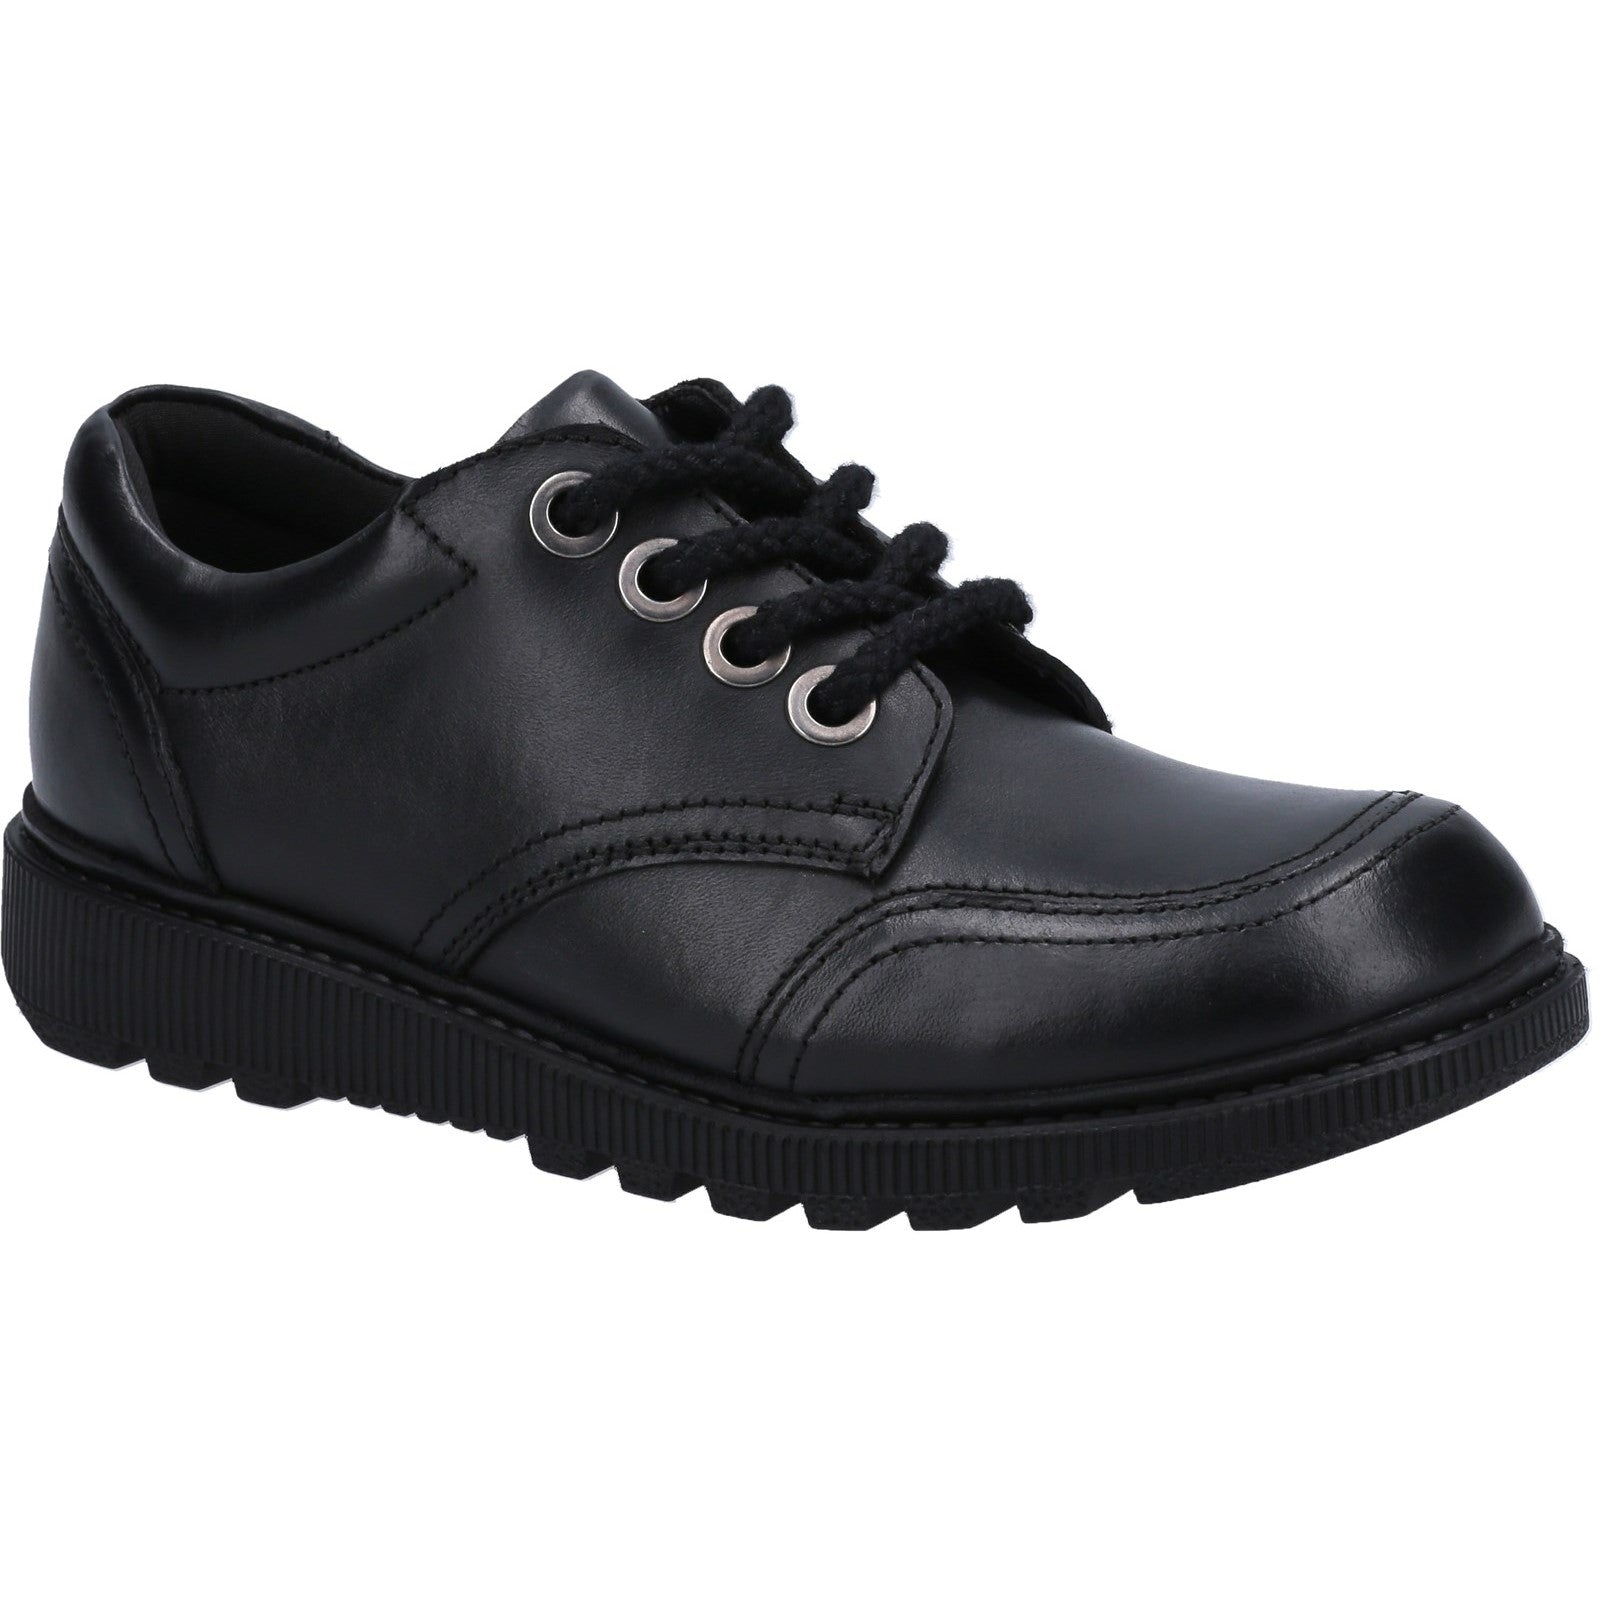 Hush Puppies Girls Kiera Leather School Shoes - Black